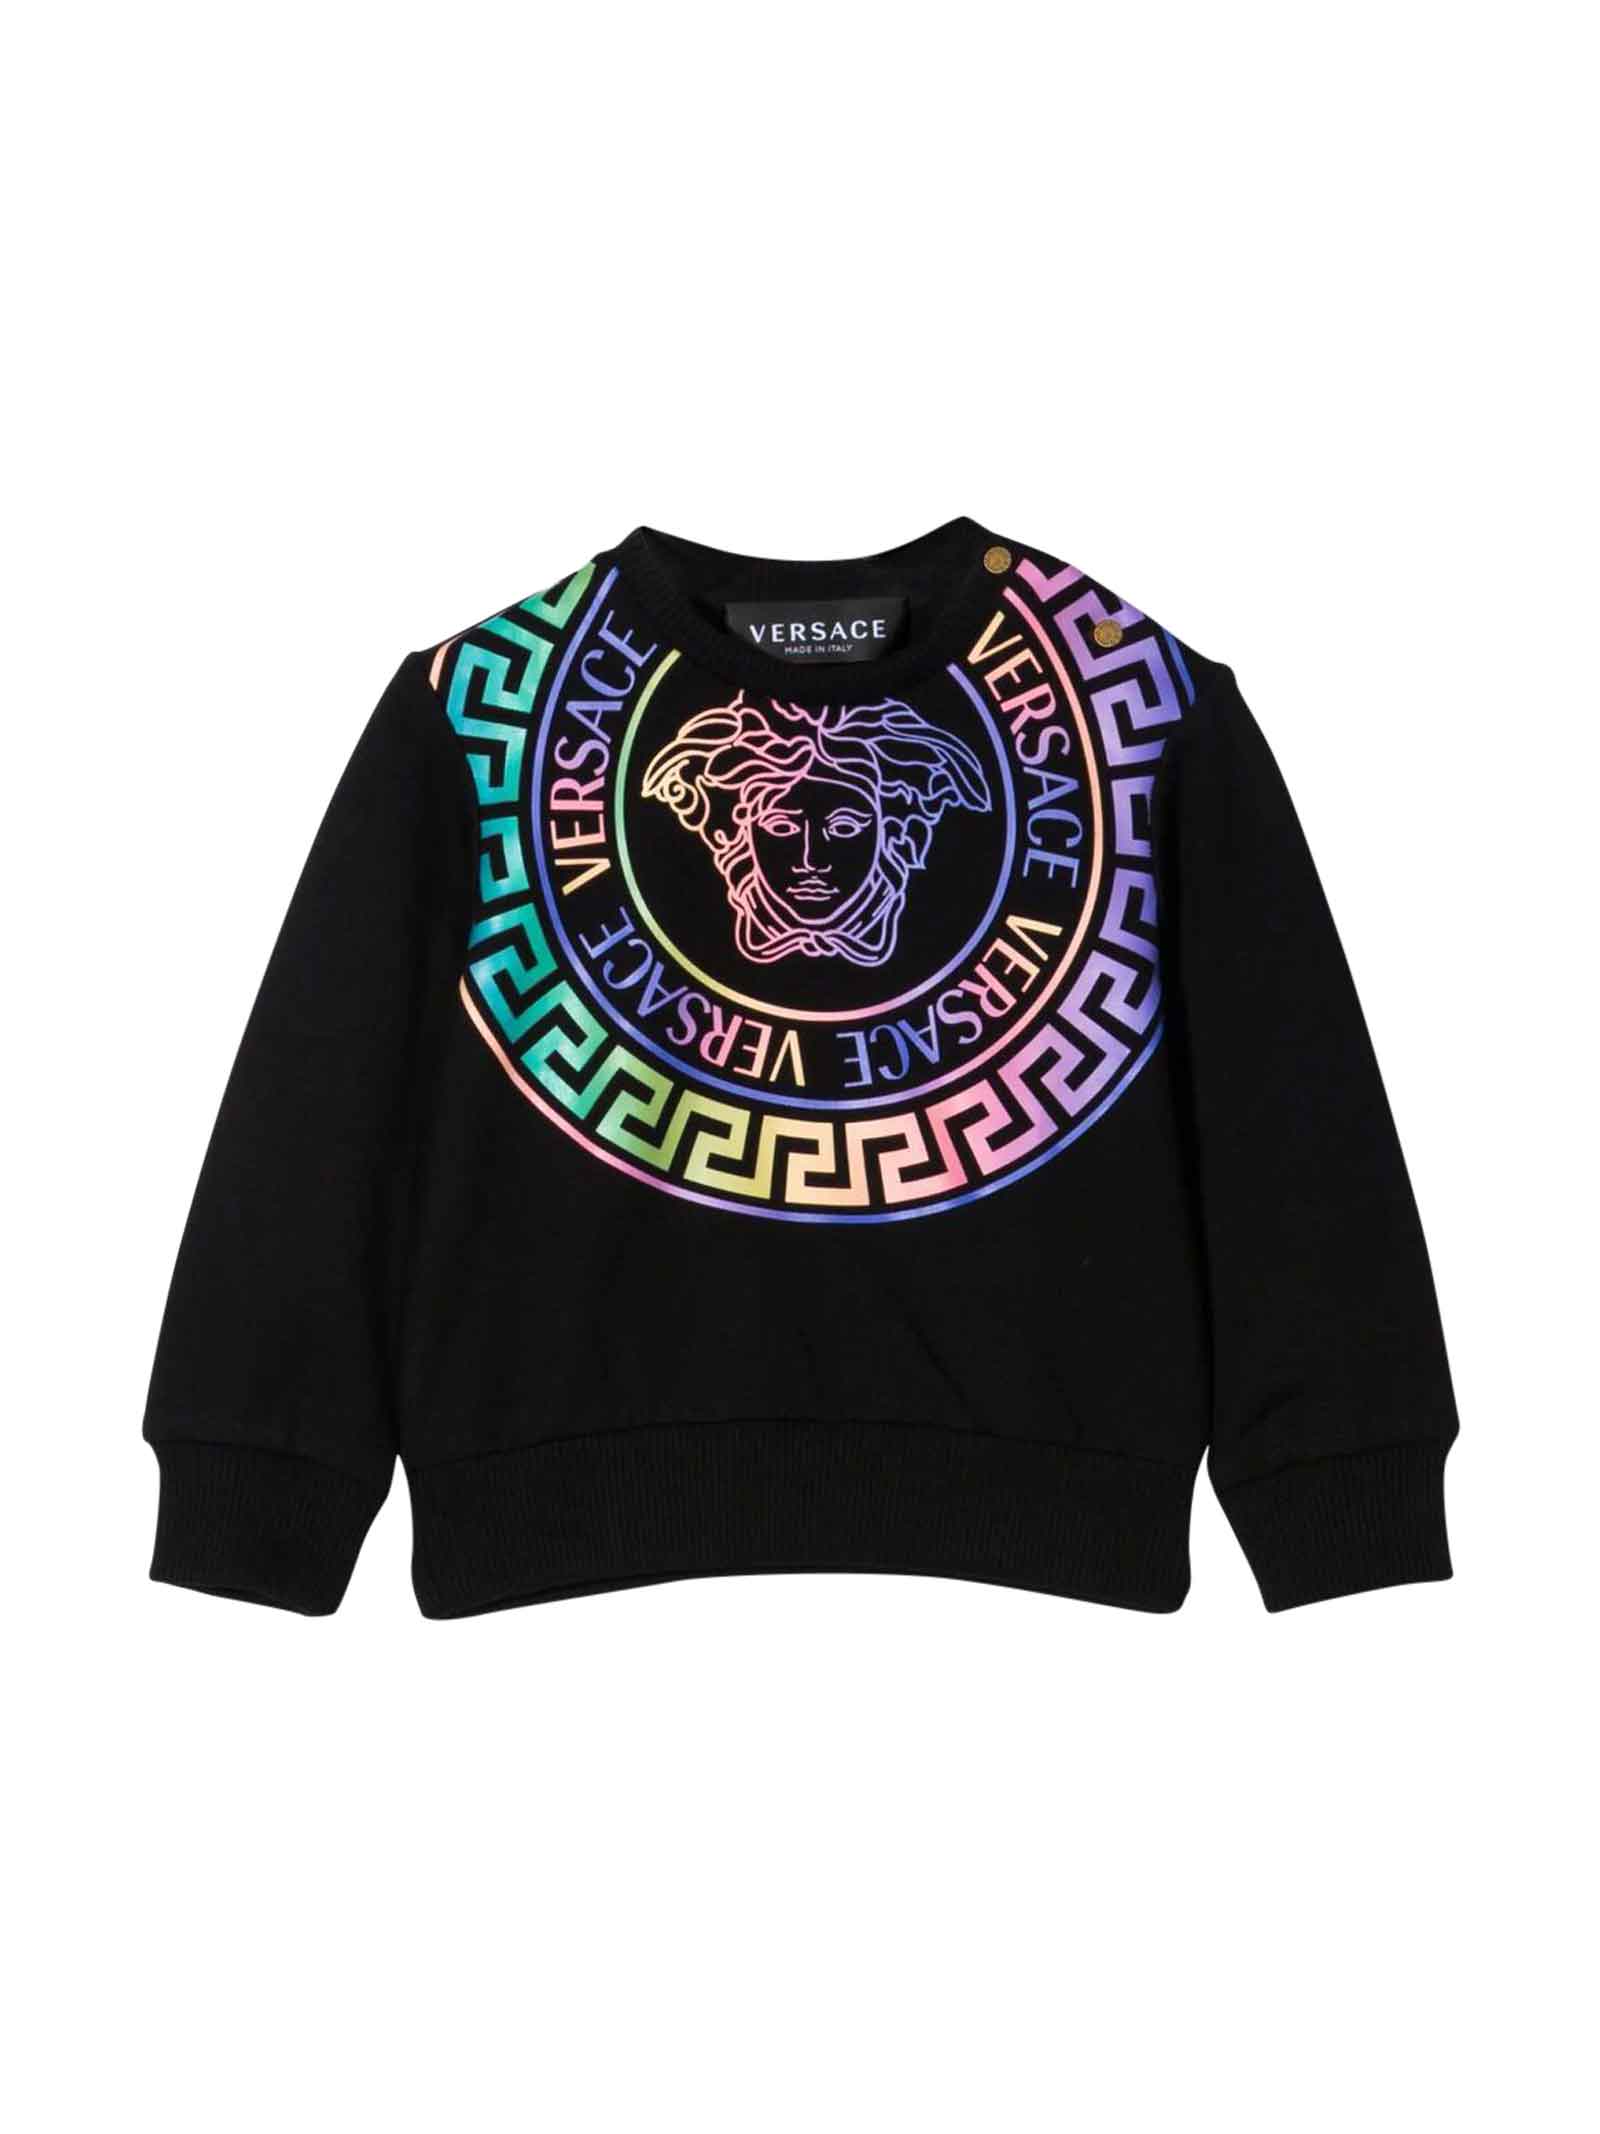 Versace Young Newborn Black Sweatshirt